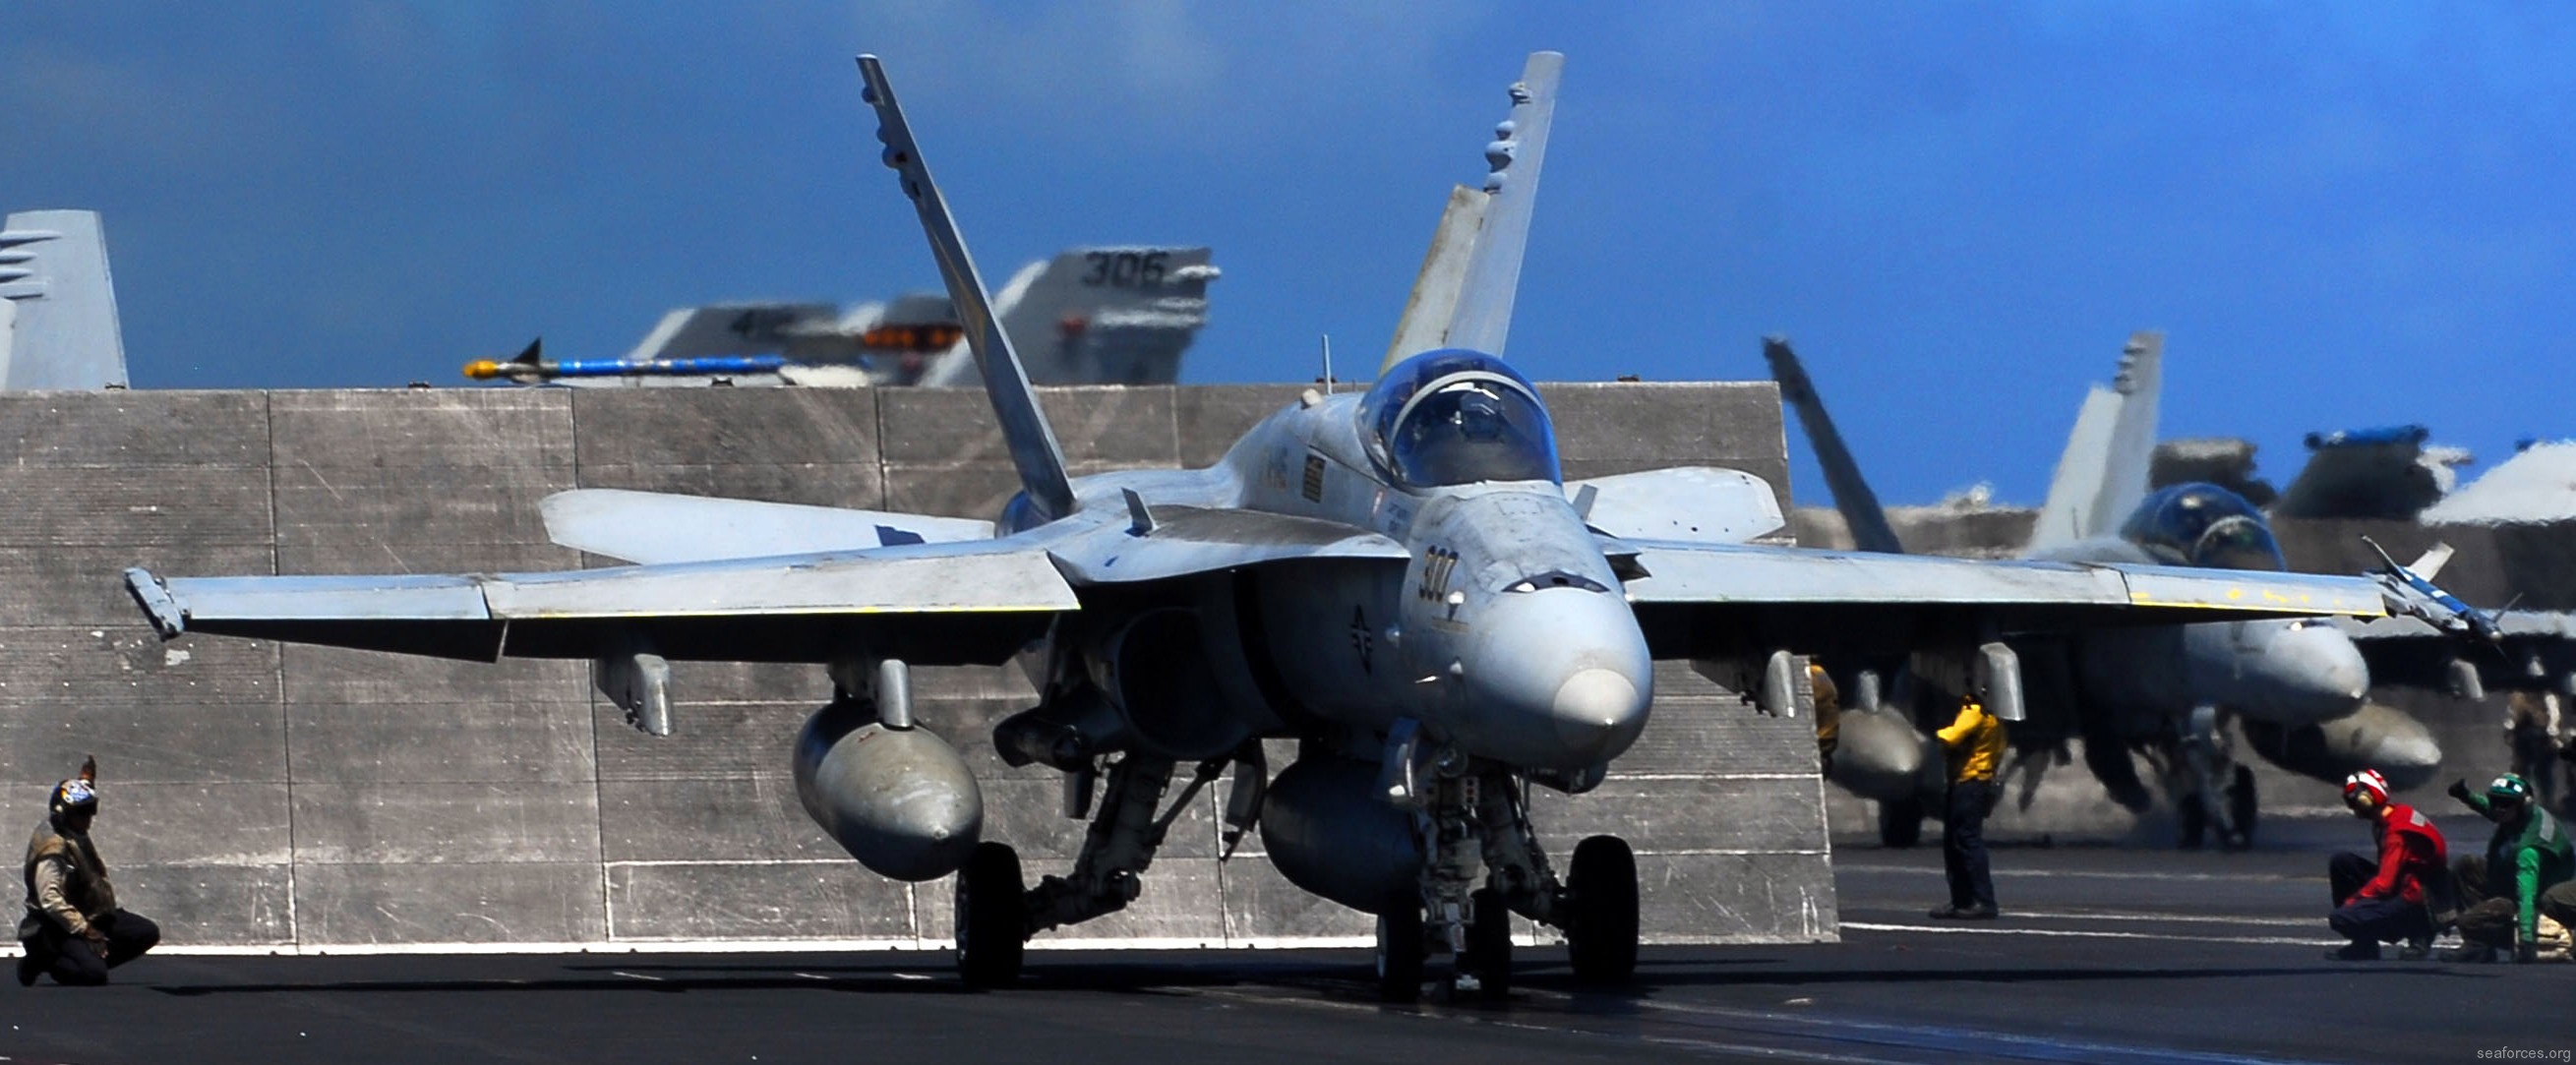 vfa-146 blue diamonds strike fighter squadron f/a-18c hornet carrier air wing cvw-9 uss john c. stennis cvn-74 106